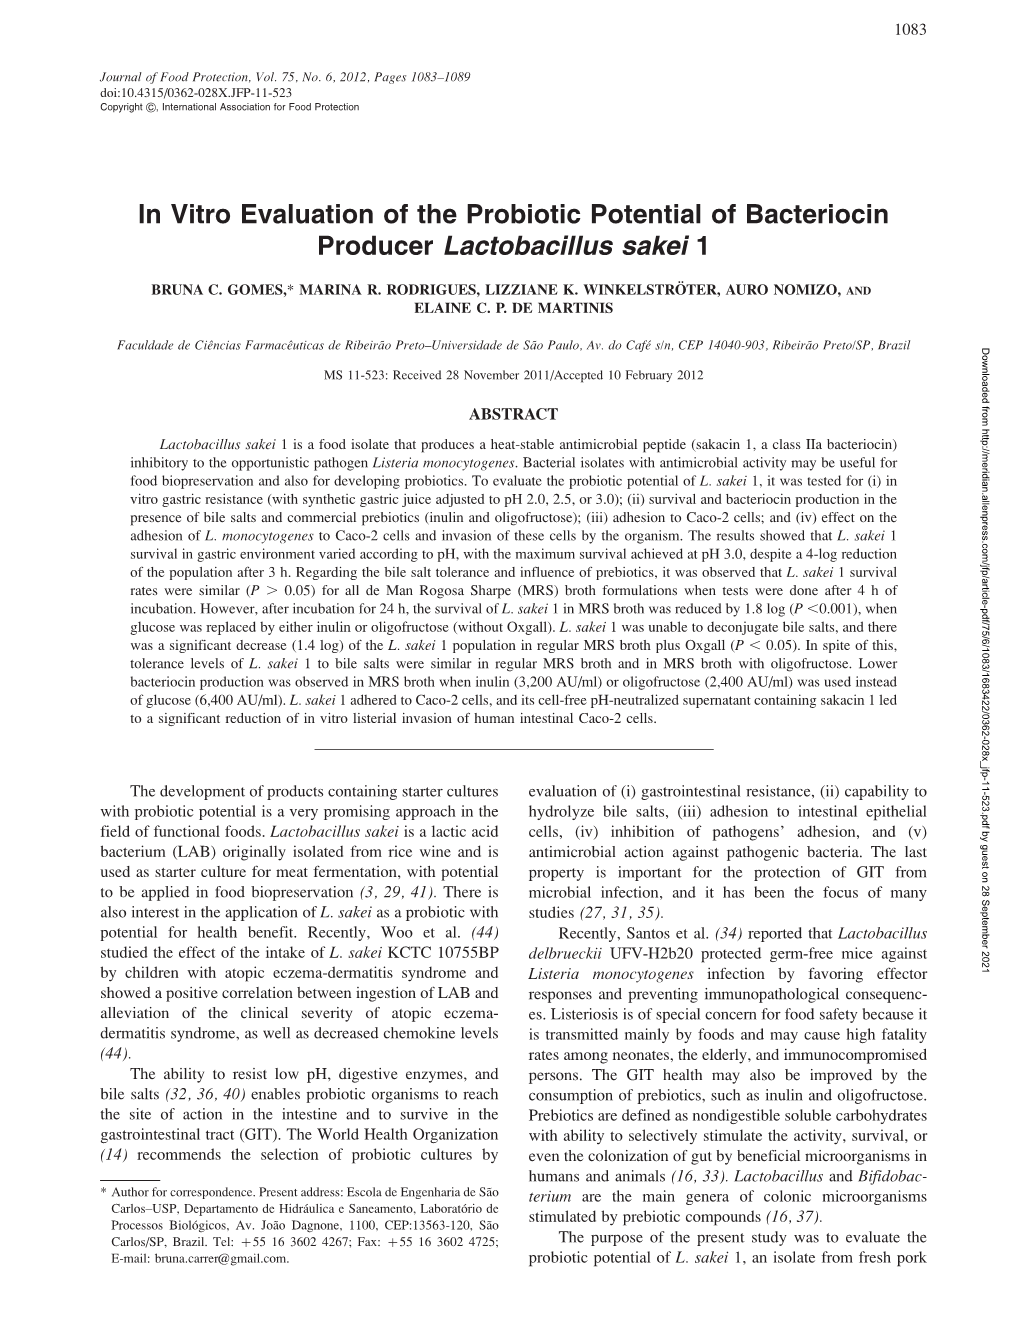 In Vitro Evaluation of the Probiotic Potential of Bacteriocin Producer Lactobacillus Sakei 1